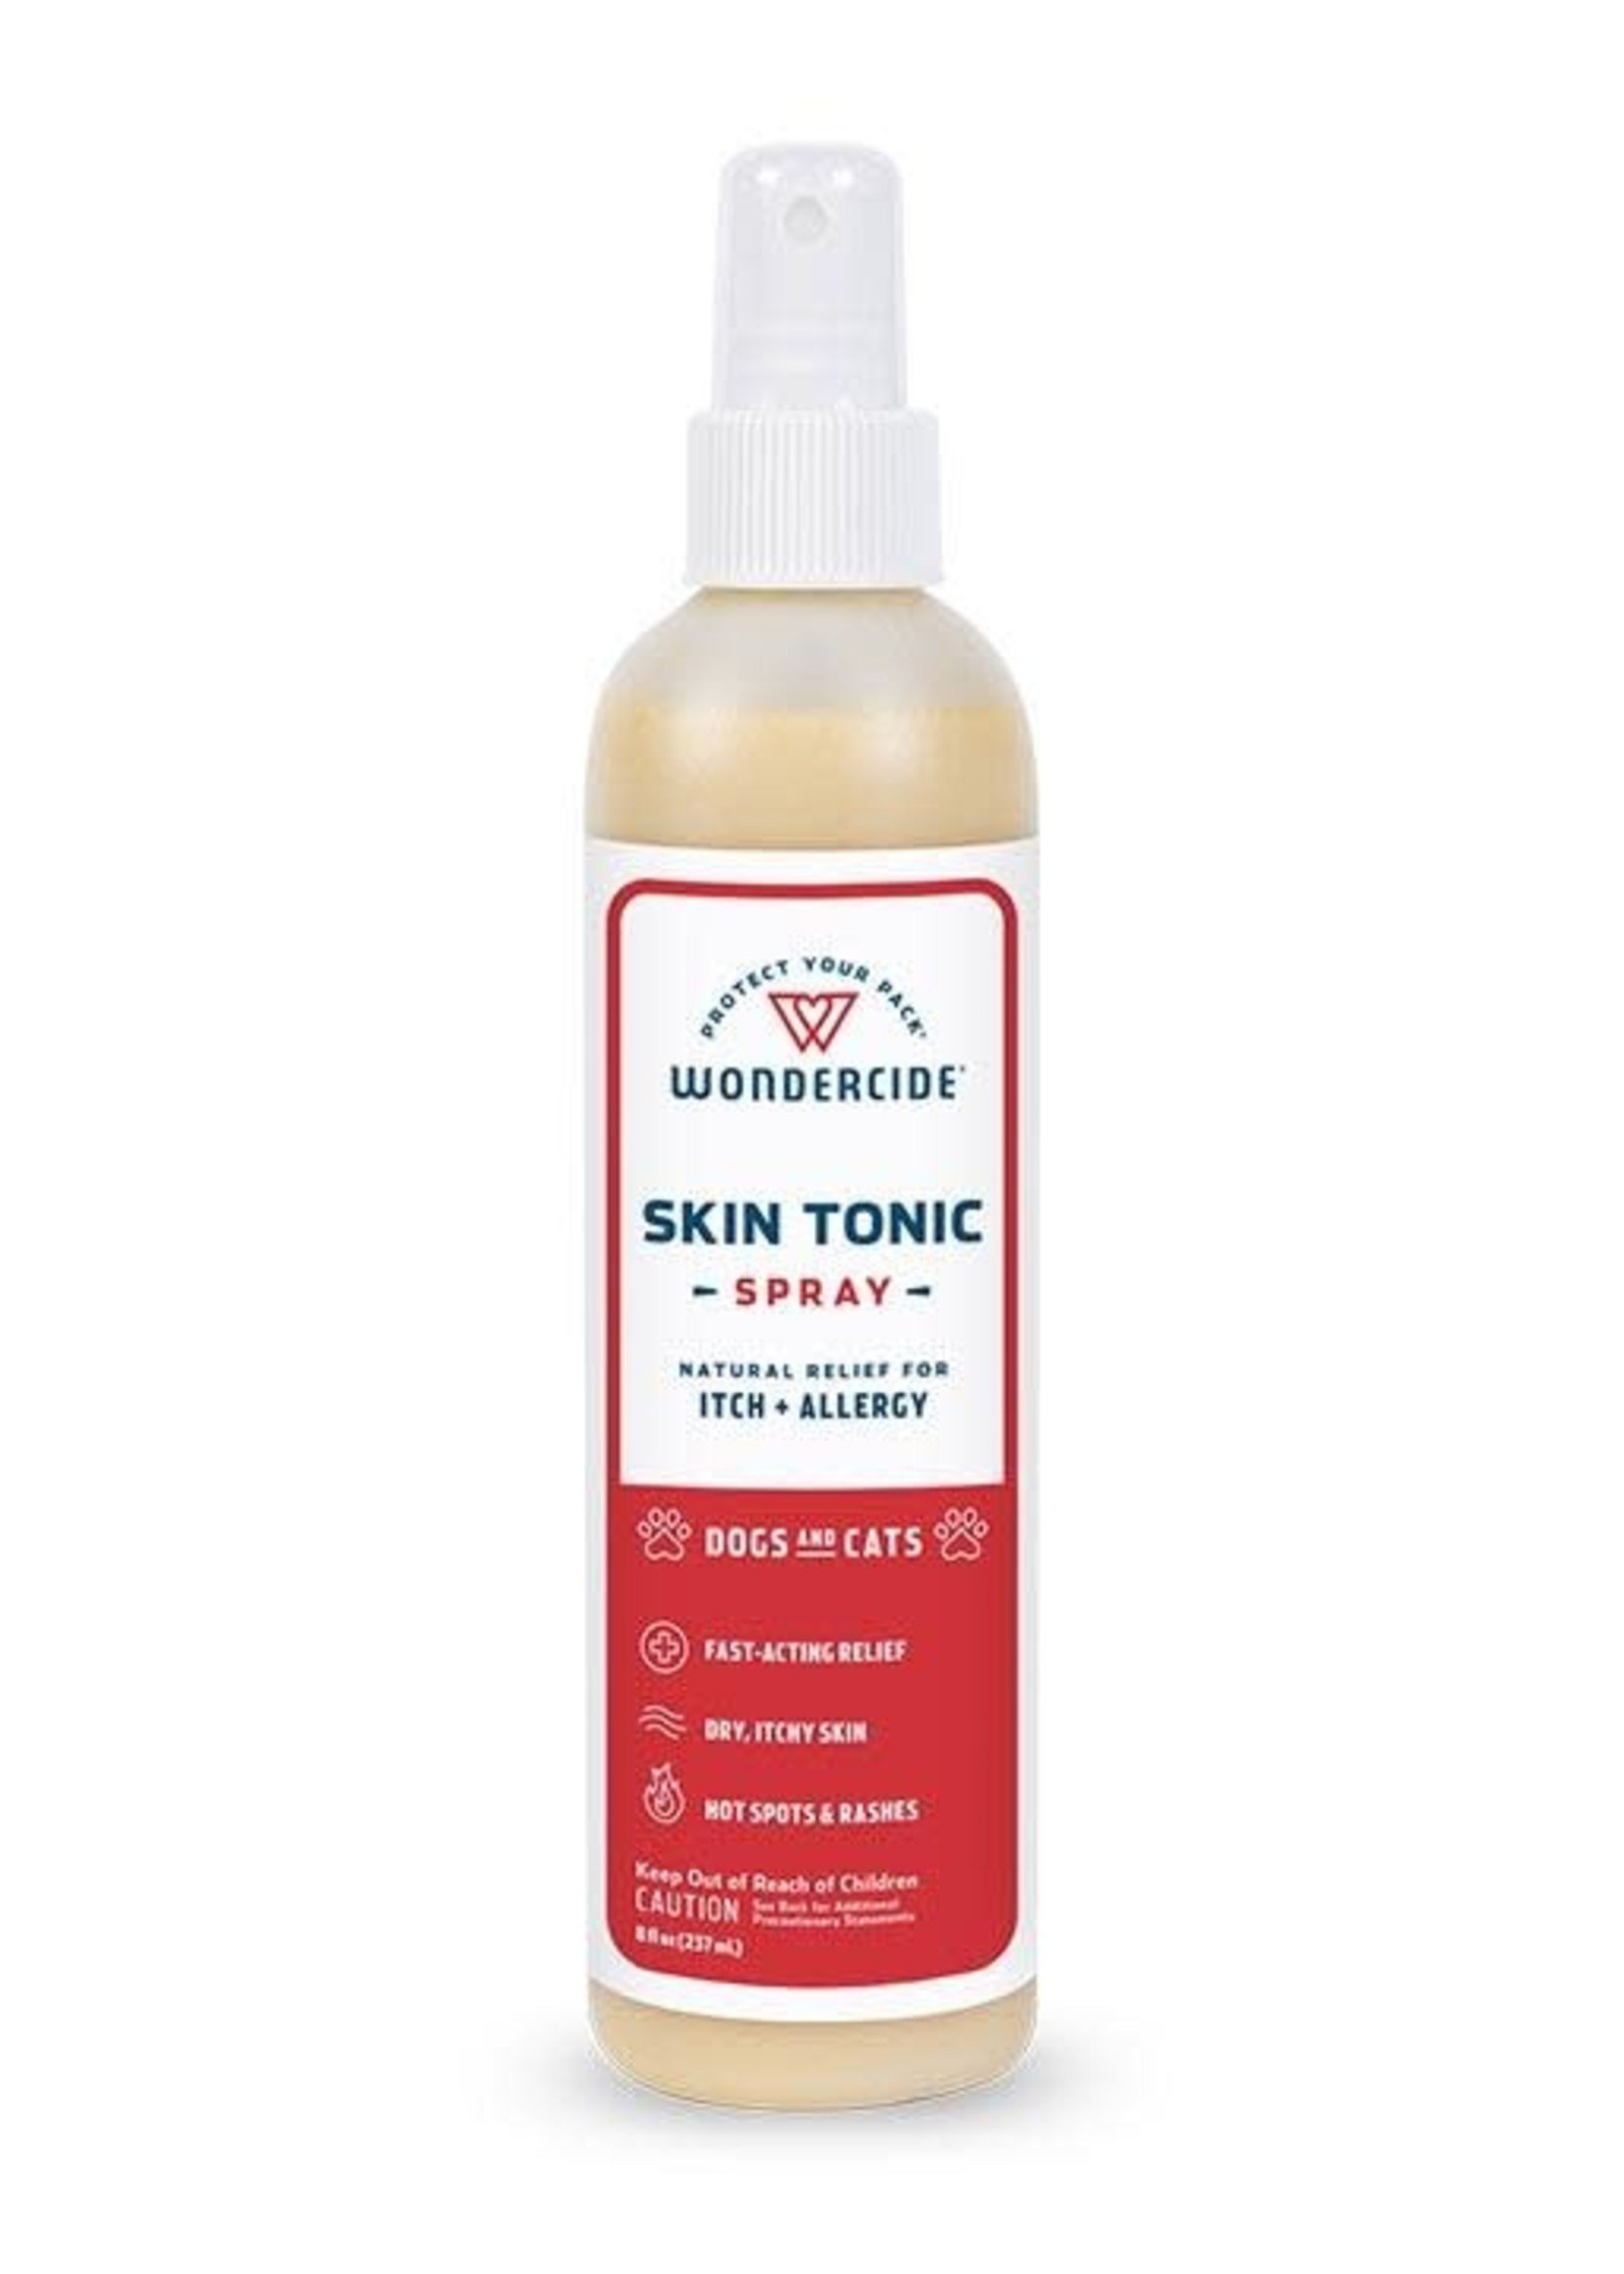 Wondercide Wondercide Skin Tonic Spray 8 oz